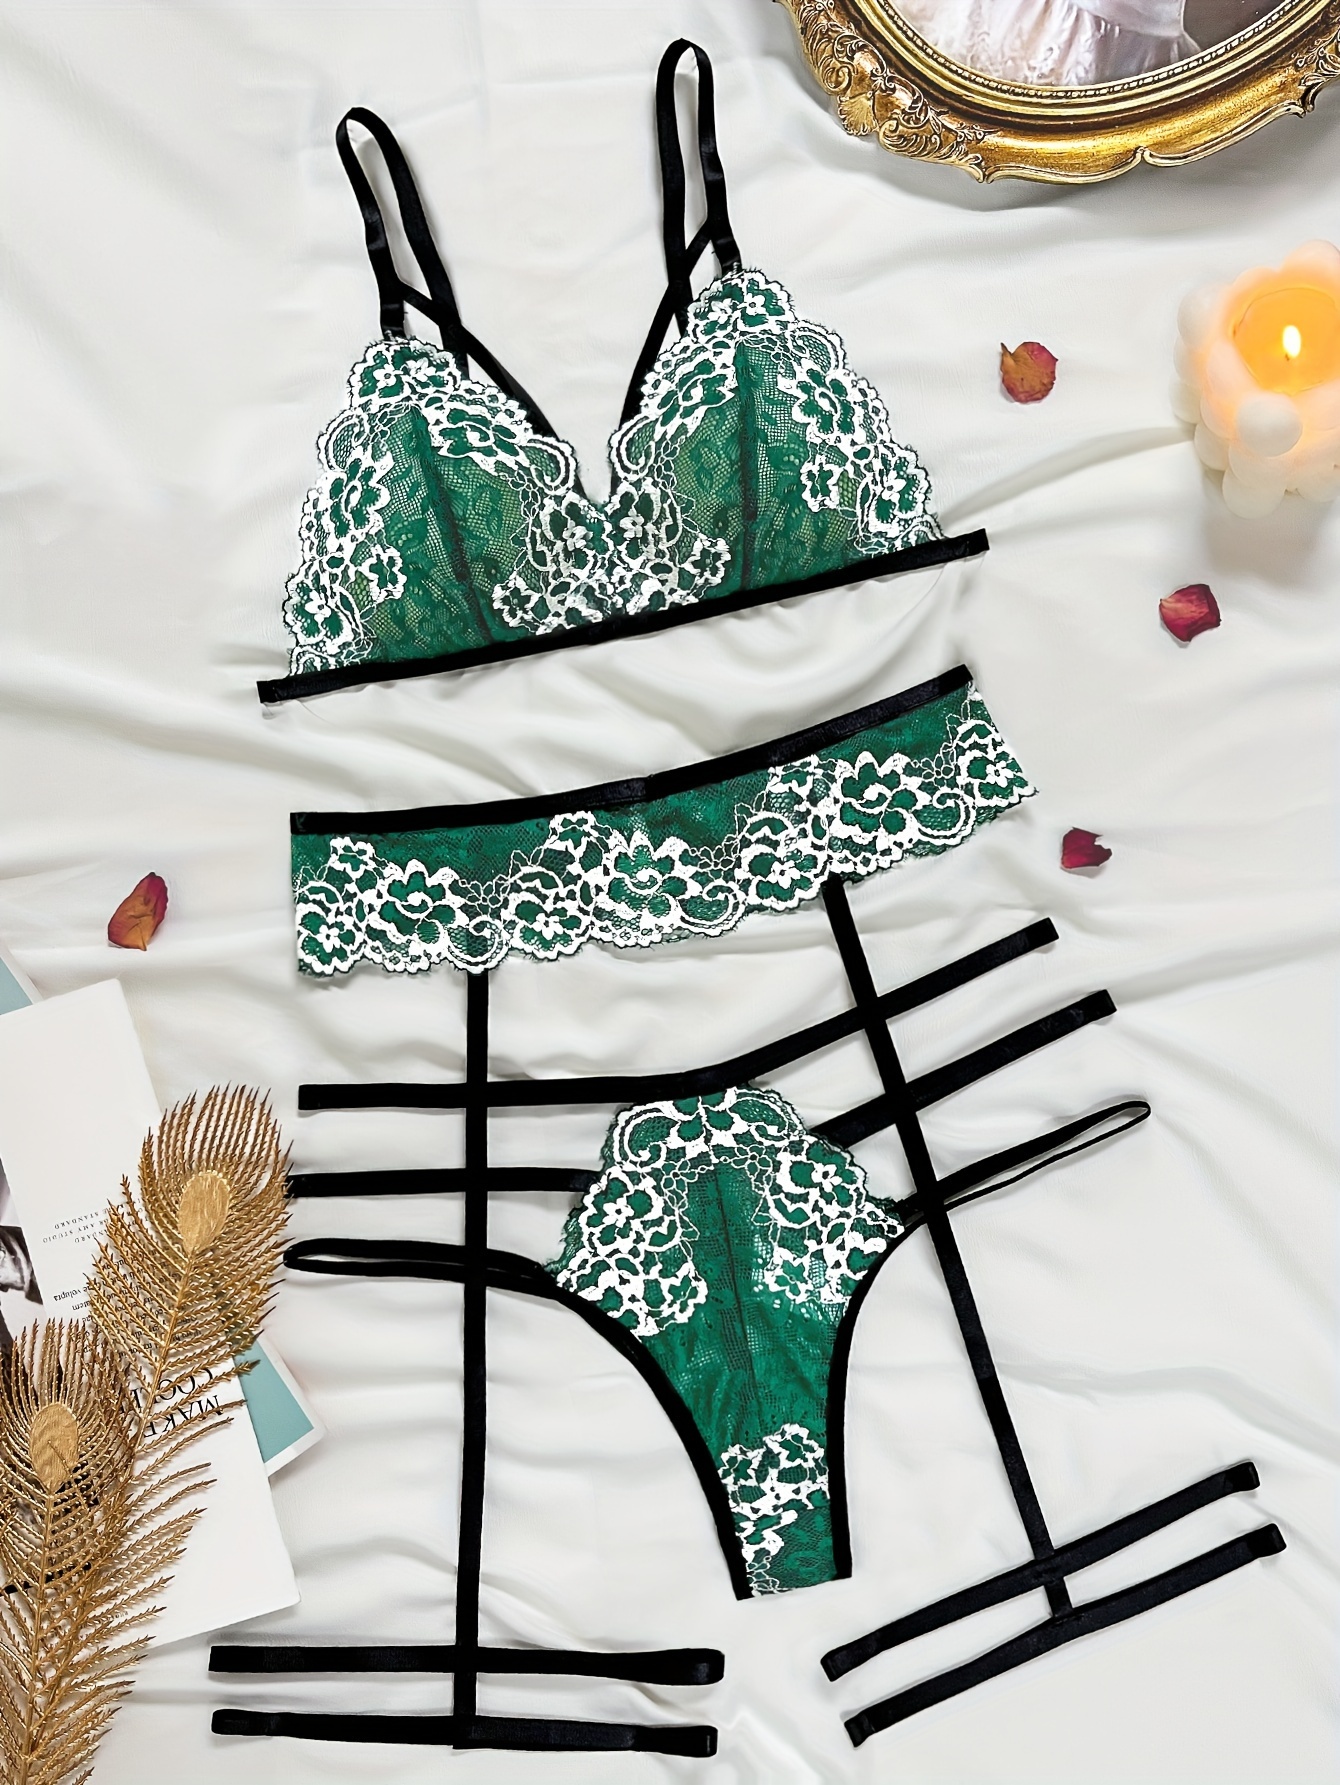 Plain Neon Green Lace * Bra & Panty, Scallop Trim Floral Pattern Bra &  Panties Lingerie Set, Women's Lingerie & Underwear